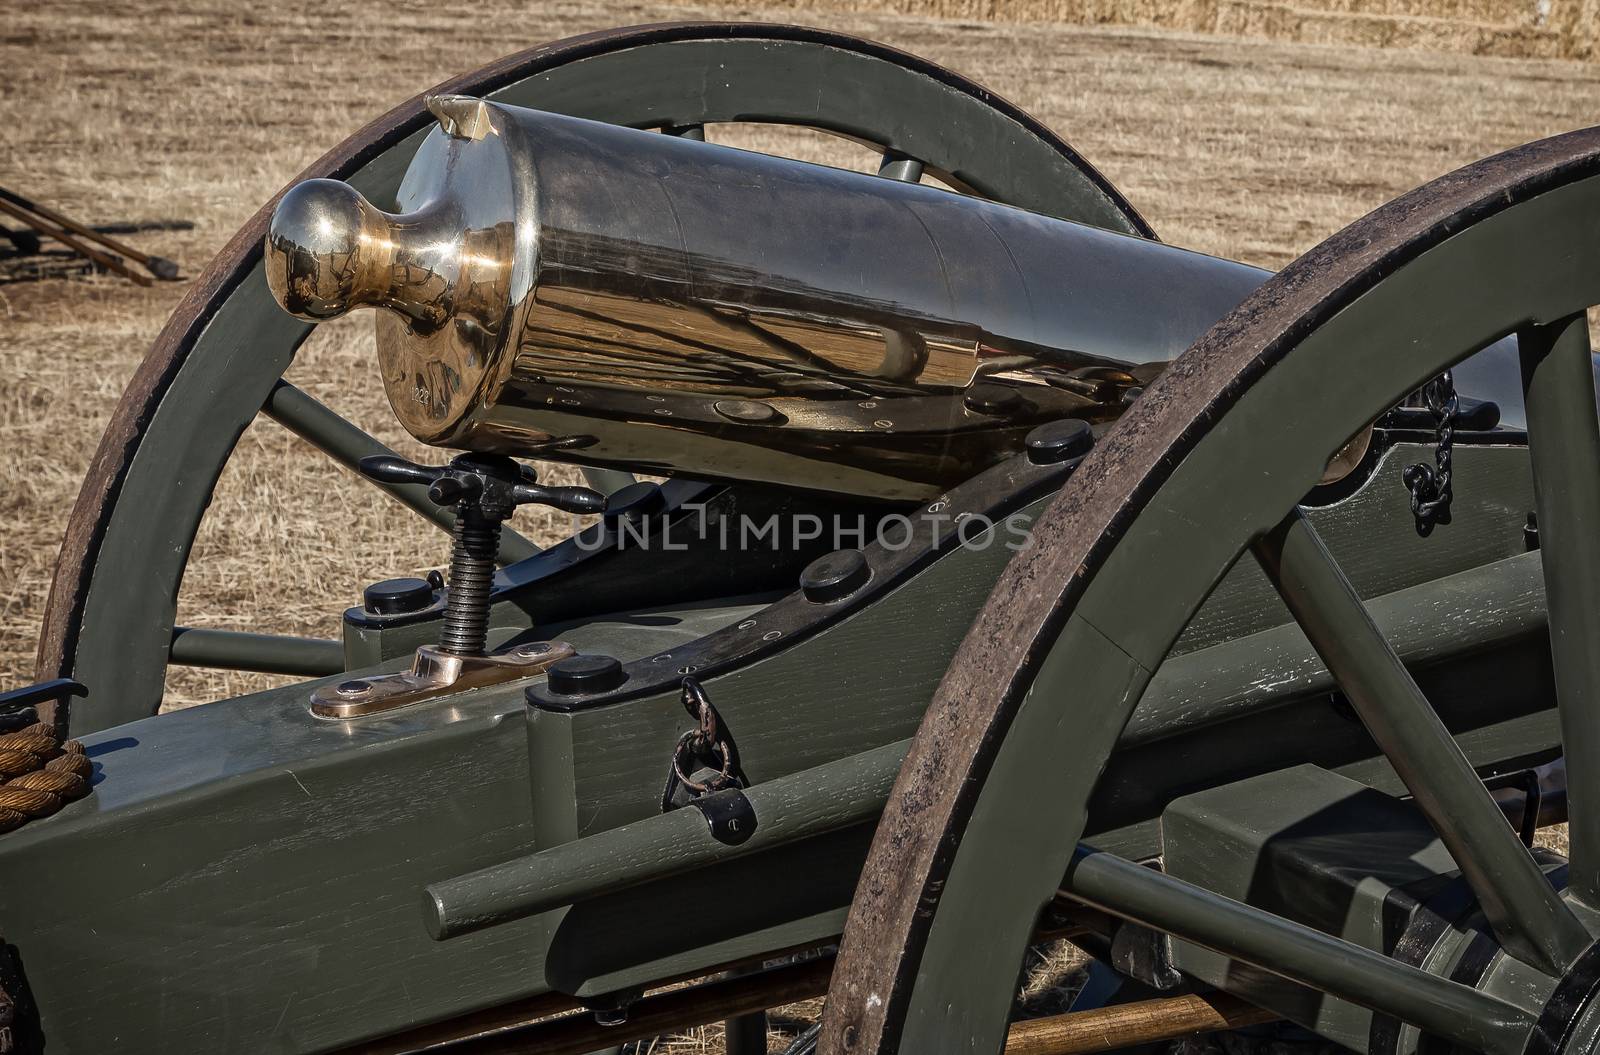 Civil War era cannon, Civil War Reenactment at Hawes Farm in Anderson, California.